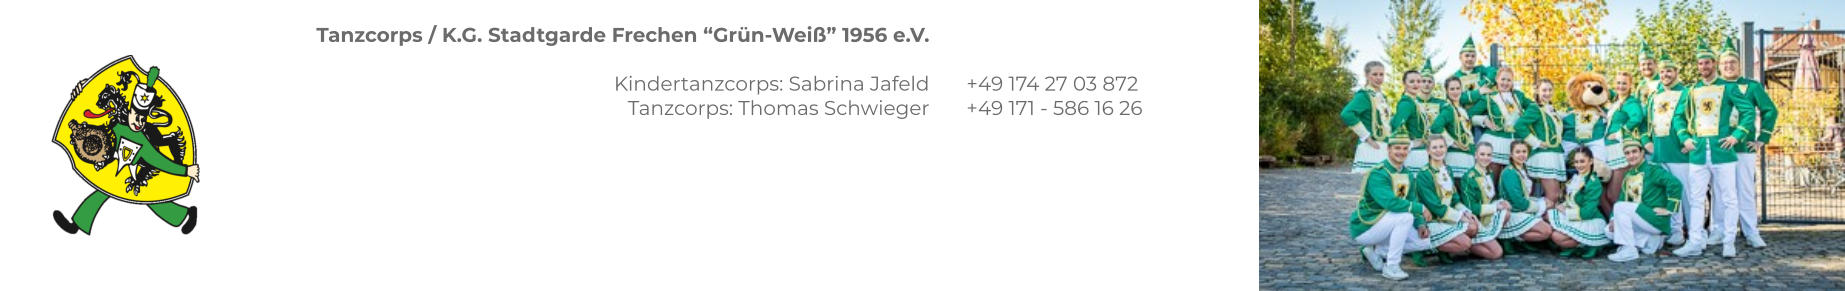 Tanzcorps / K.G. Stadtgarde Frechen “Grün-Weiß” 1956 e.V.  Kindertanzcorps: Sabrina Jafeld Tanzcorps: Thomas Schwieger    +49 174 27 03 872 +49 171 - 586 16 26